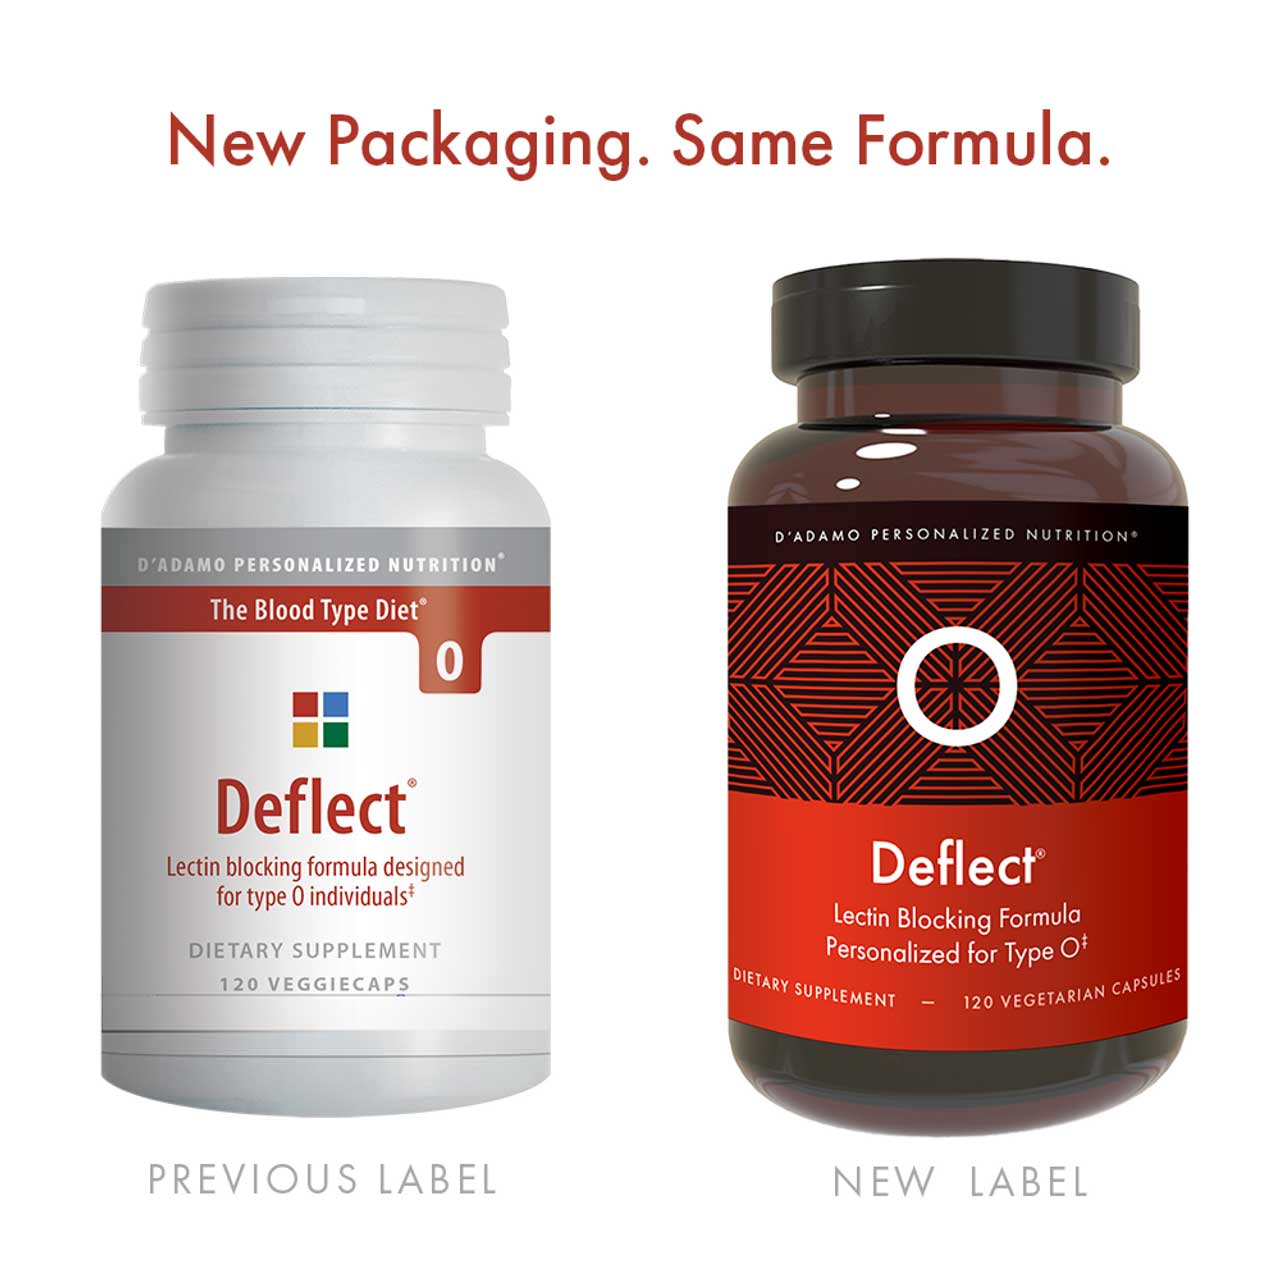 D'Adamo Personalized Nutrition Deflect O New Label